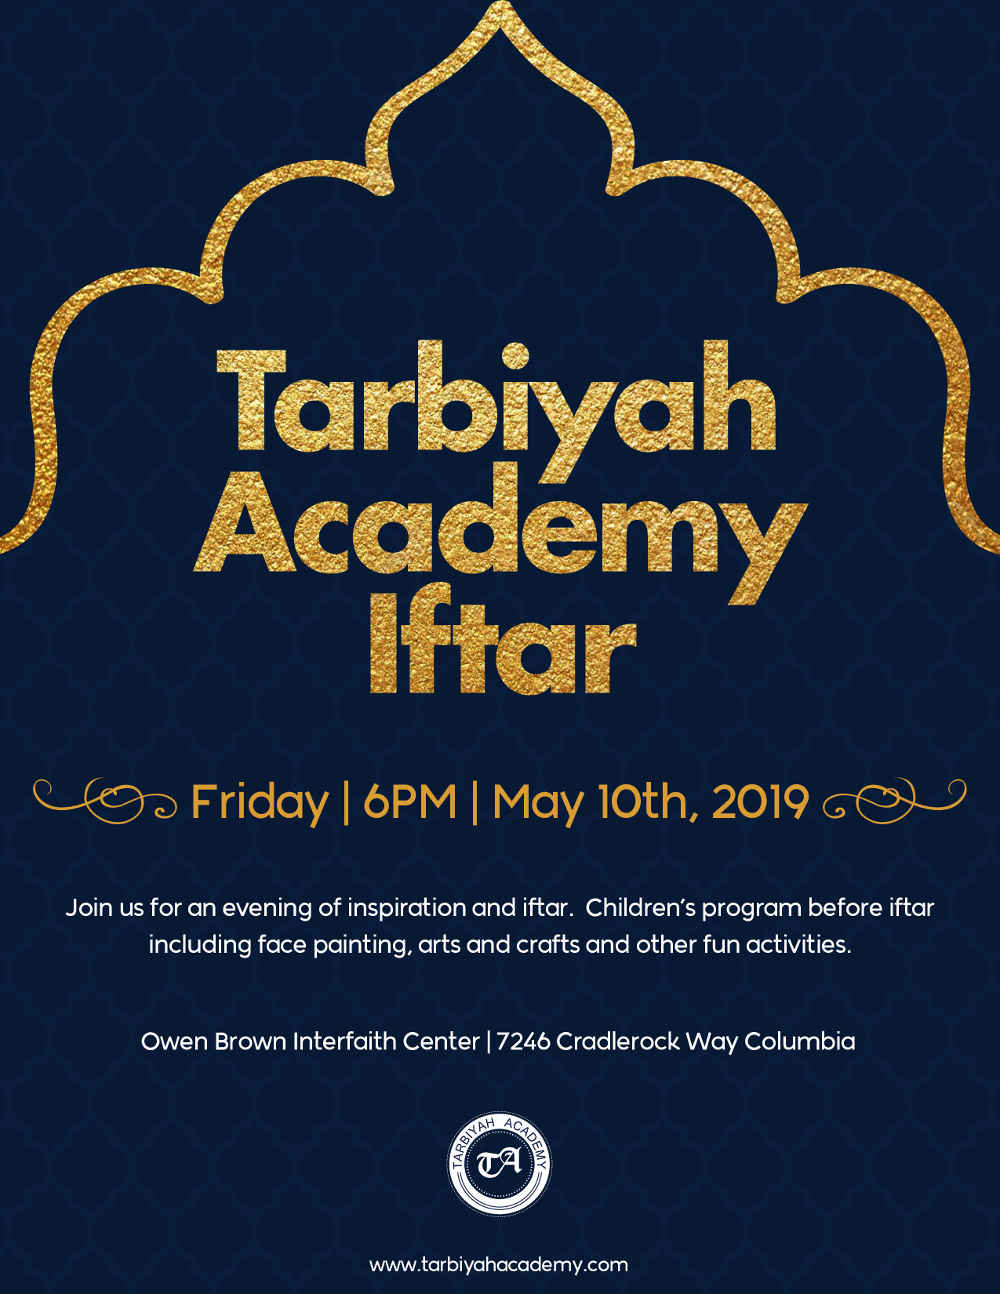 Tarbiyah Academy Iftar in gold lettering against dark blue background